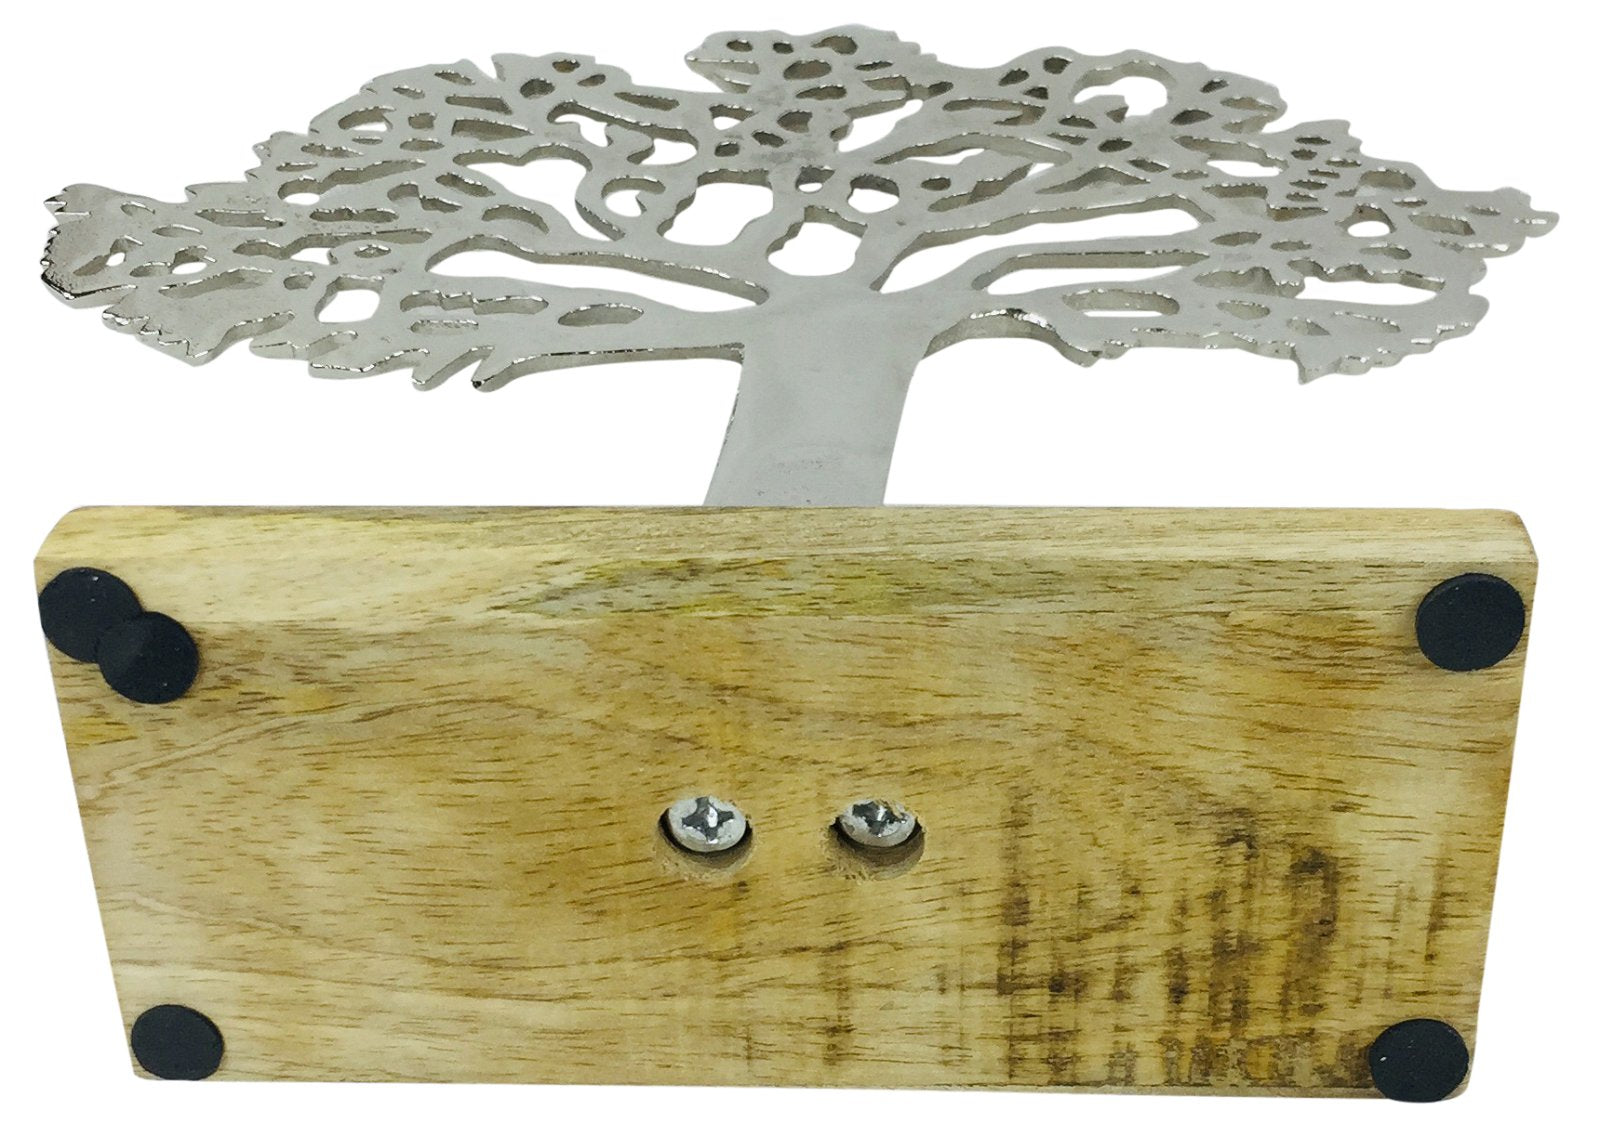 Silver Tree Ornament 26.5cm - Kaftan direct